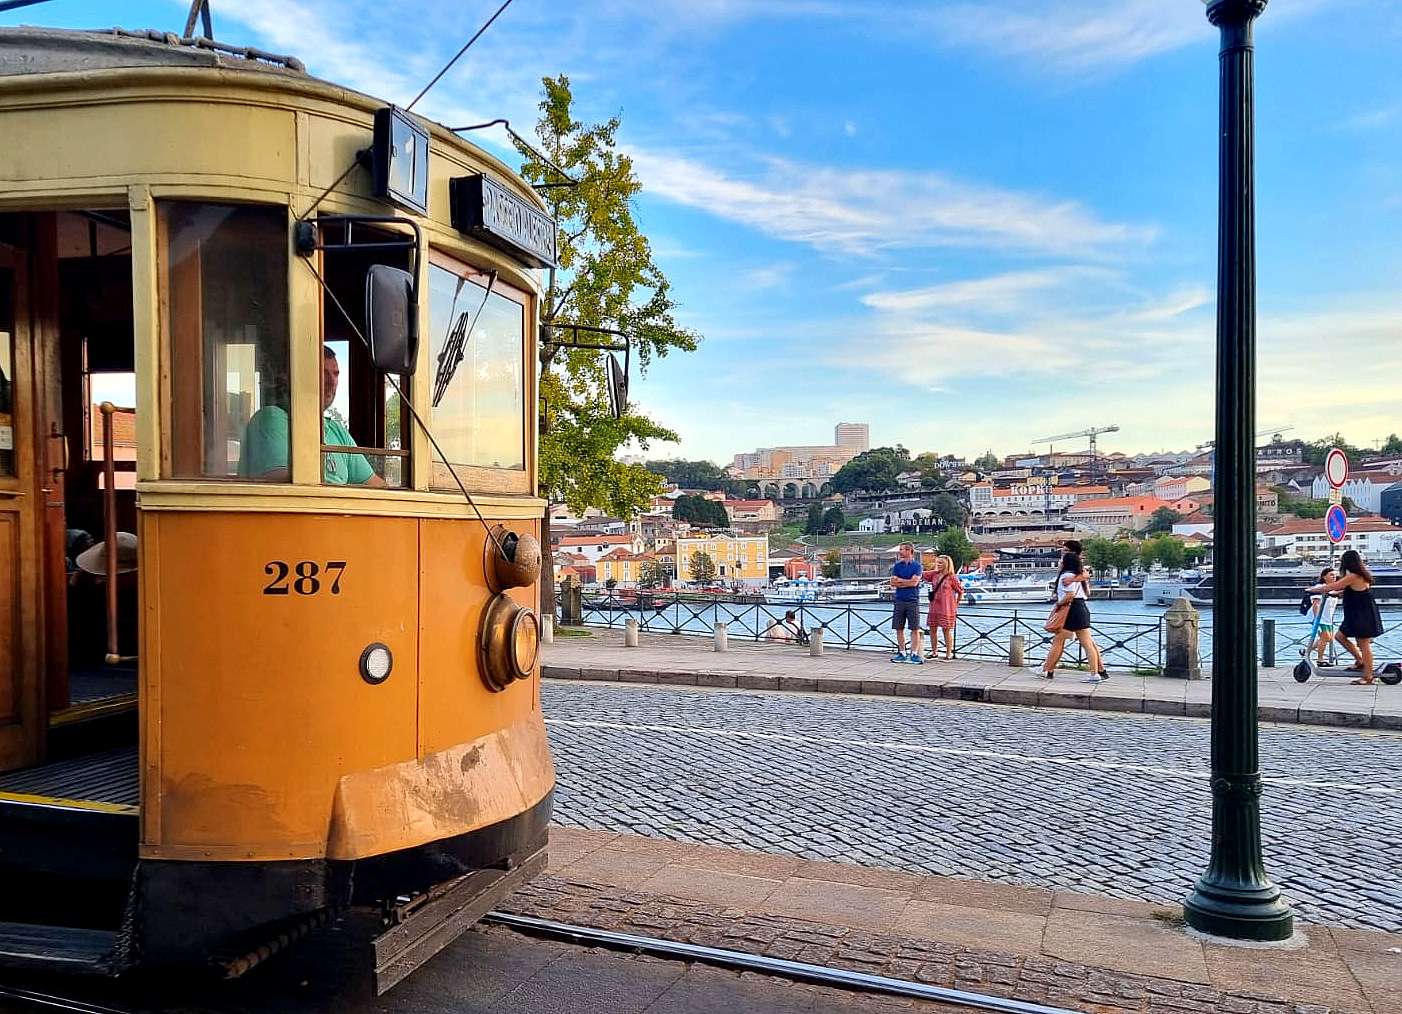 Porto - un oraș plin de viață (Portugalia) jigsaw puzzle online